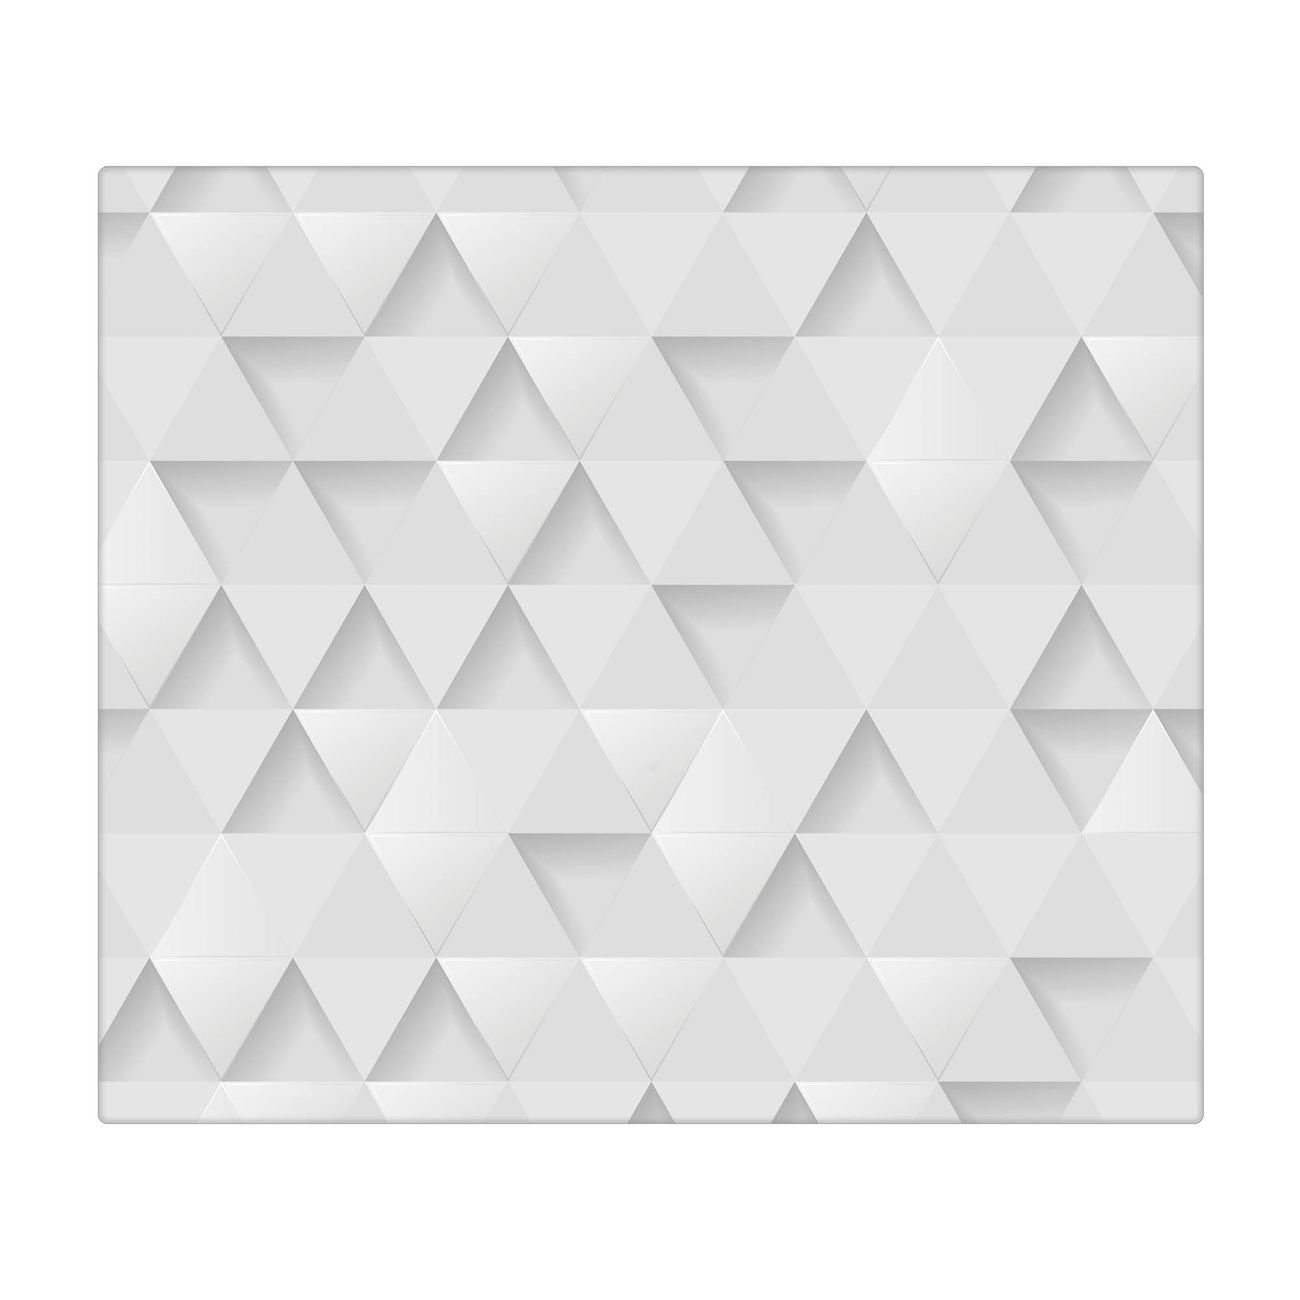 tlg., selbstklebende Weisse Dreiecke, Glas banjado (gehärtet, Gummifüßchen) inkl. 1 Herd-Abdeckplatte